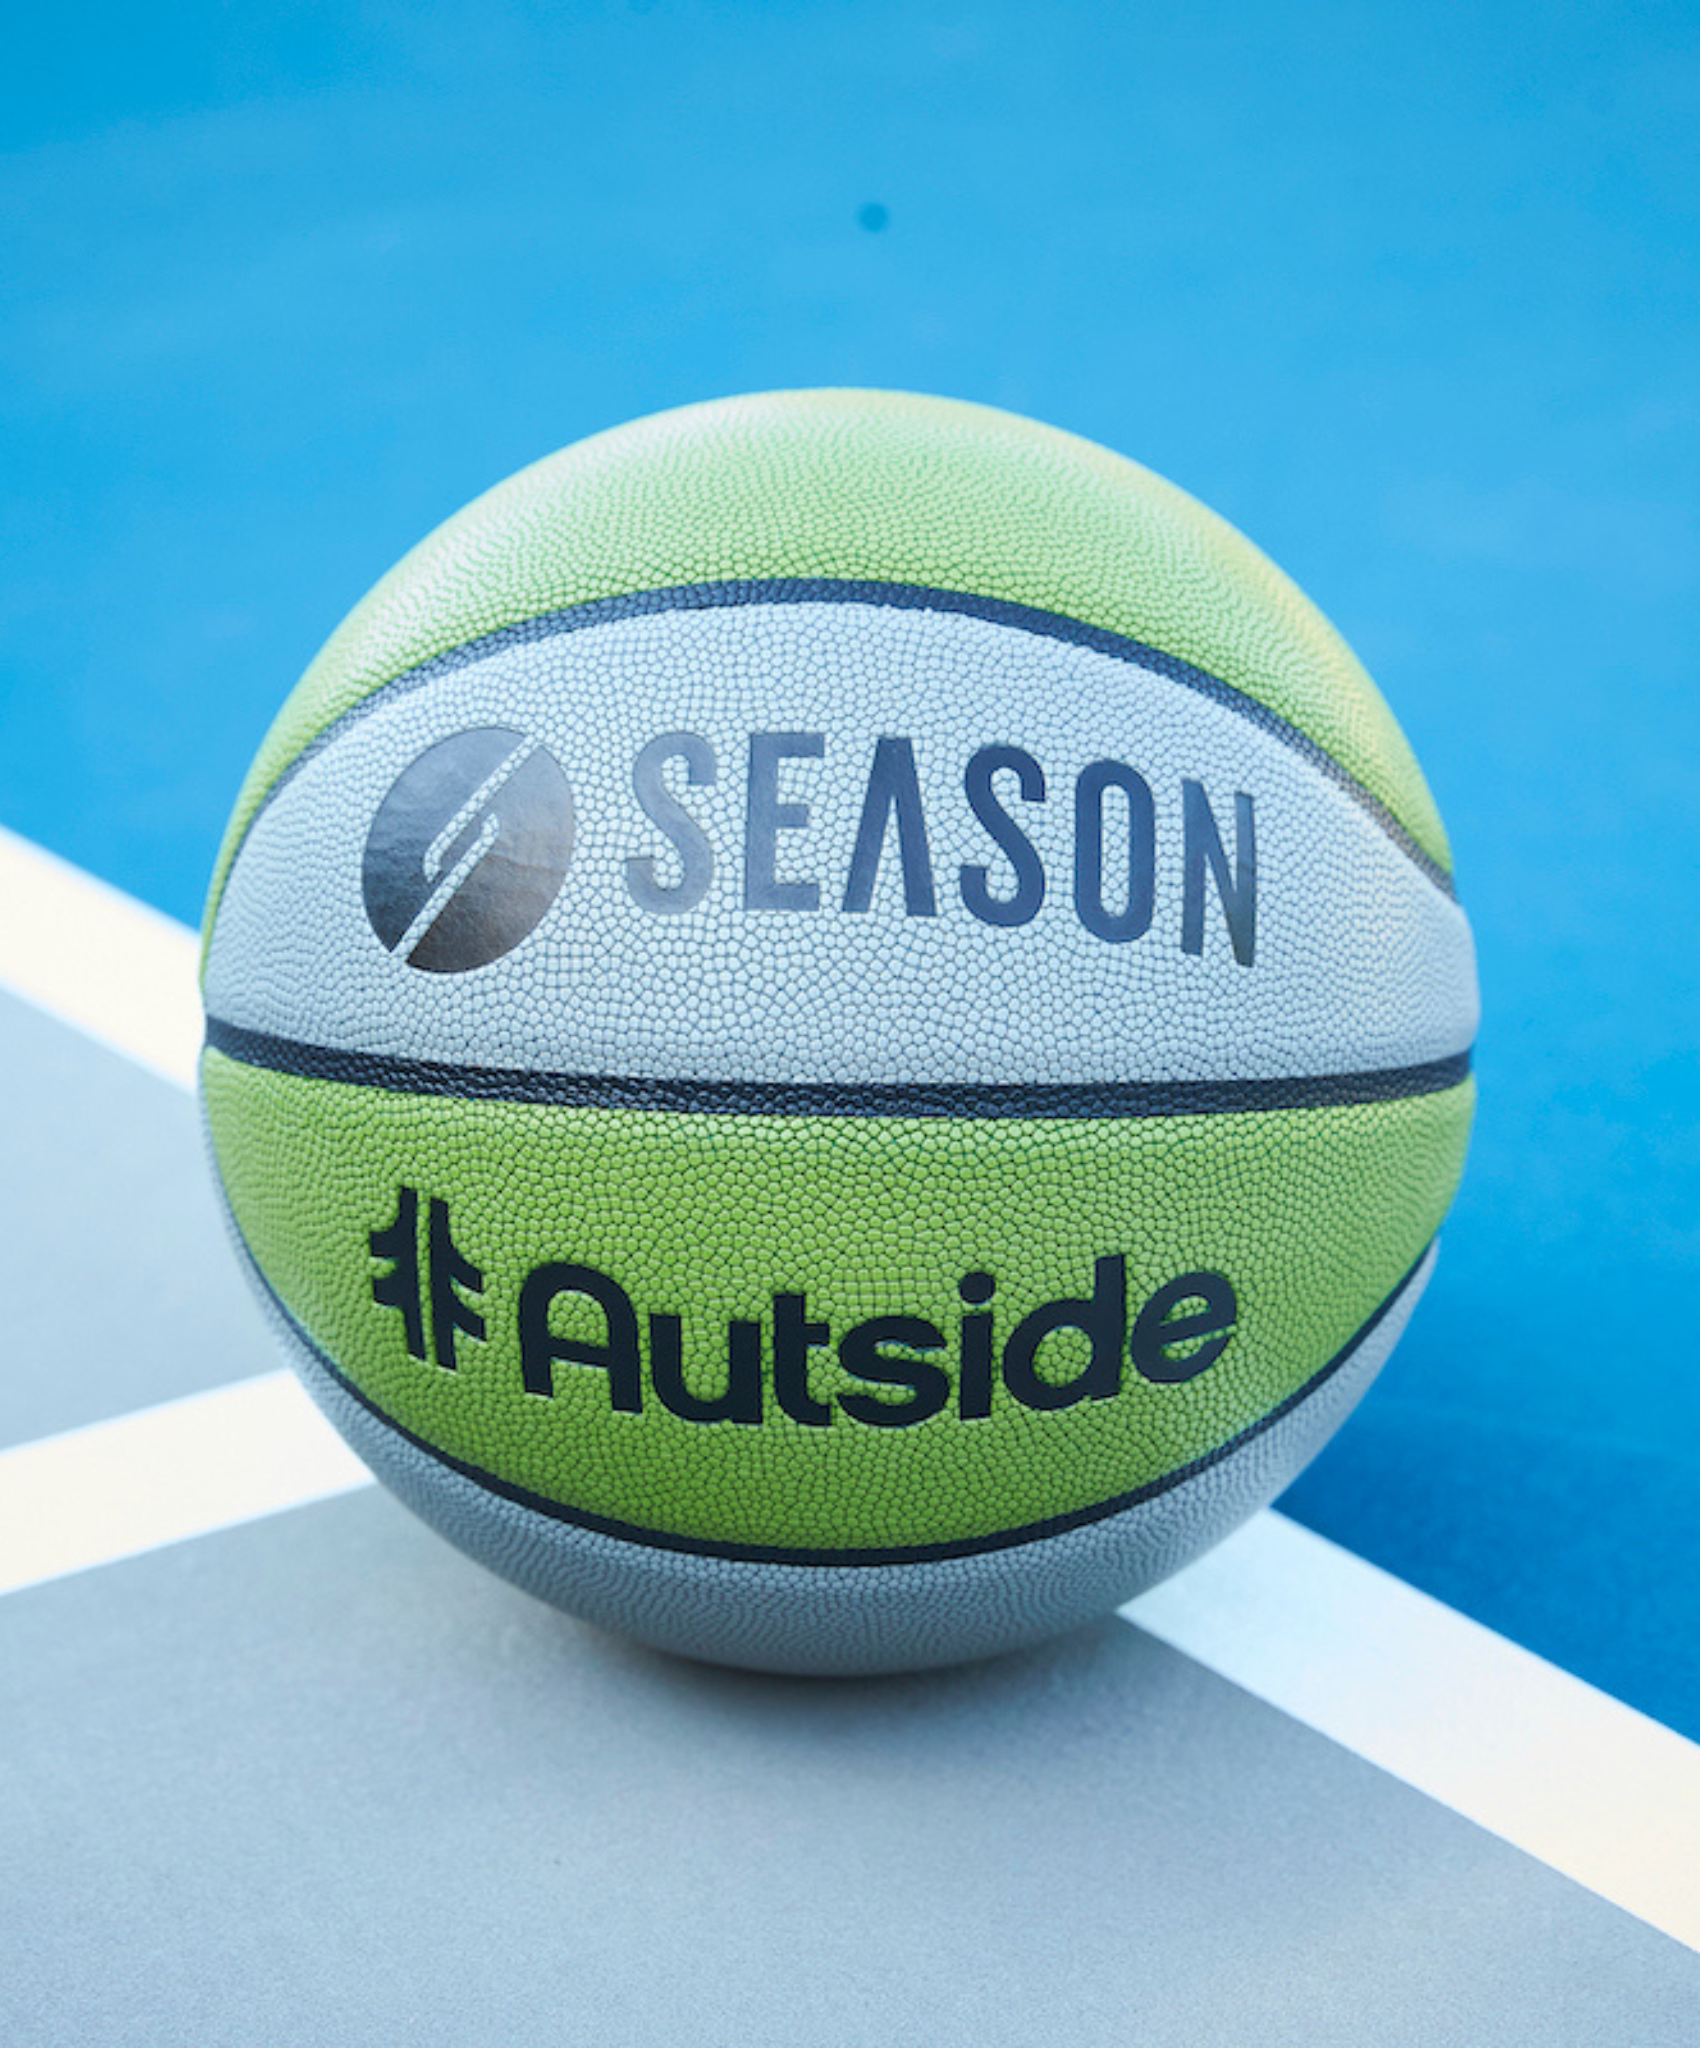 The Autside x Season All-Surface Basketball - Green / Gray